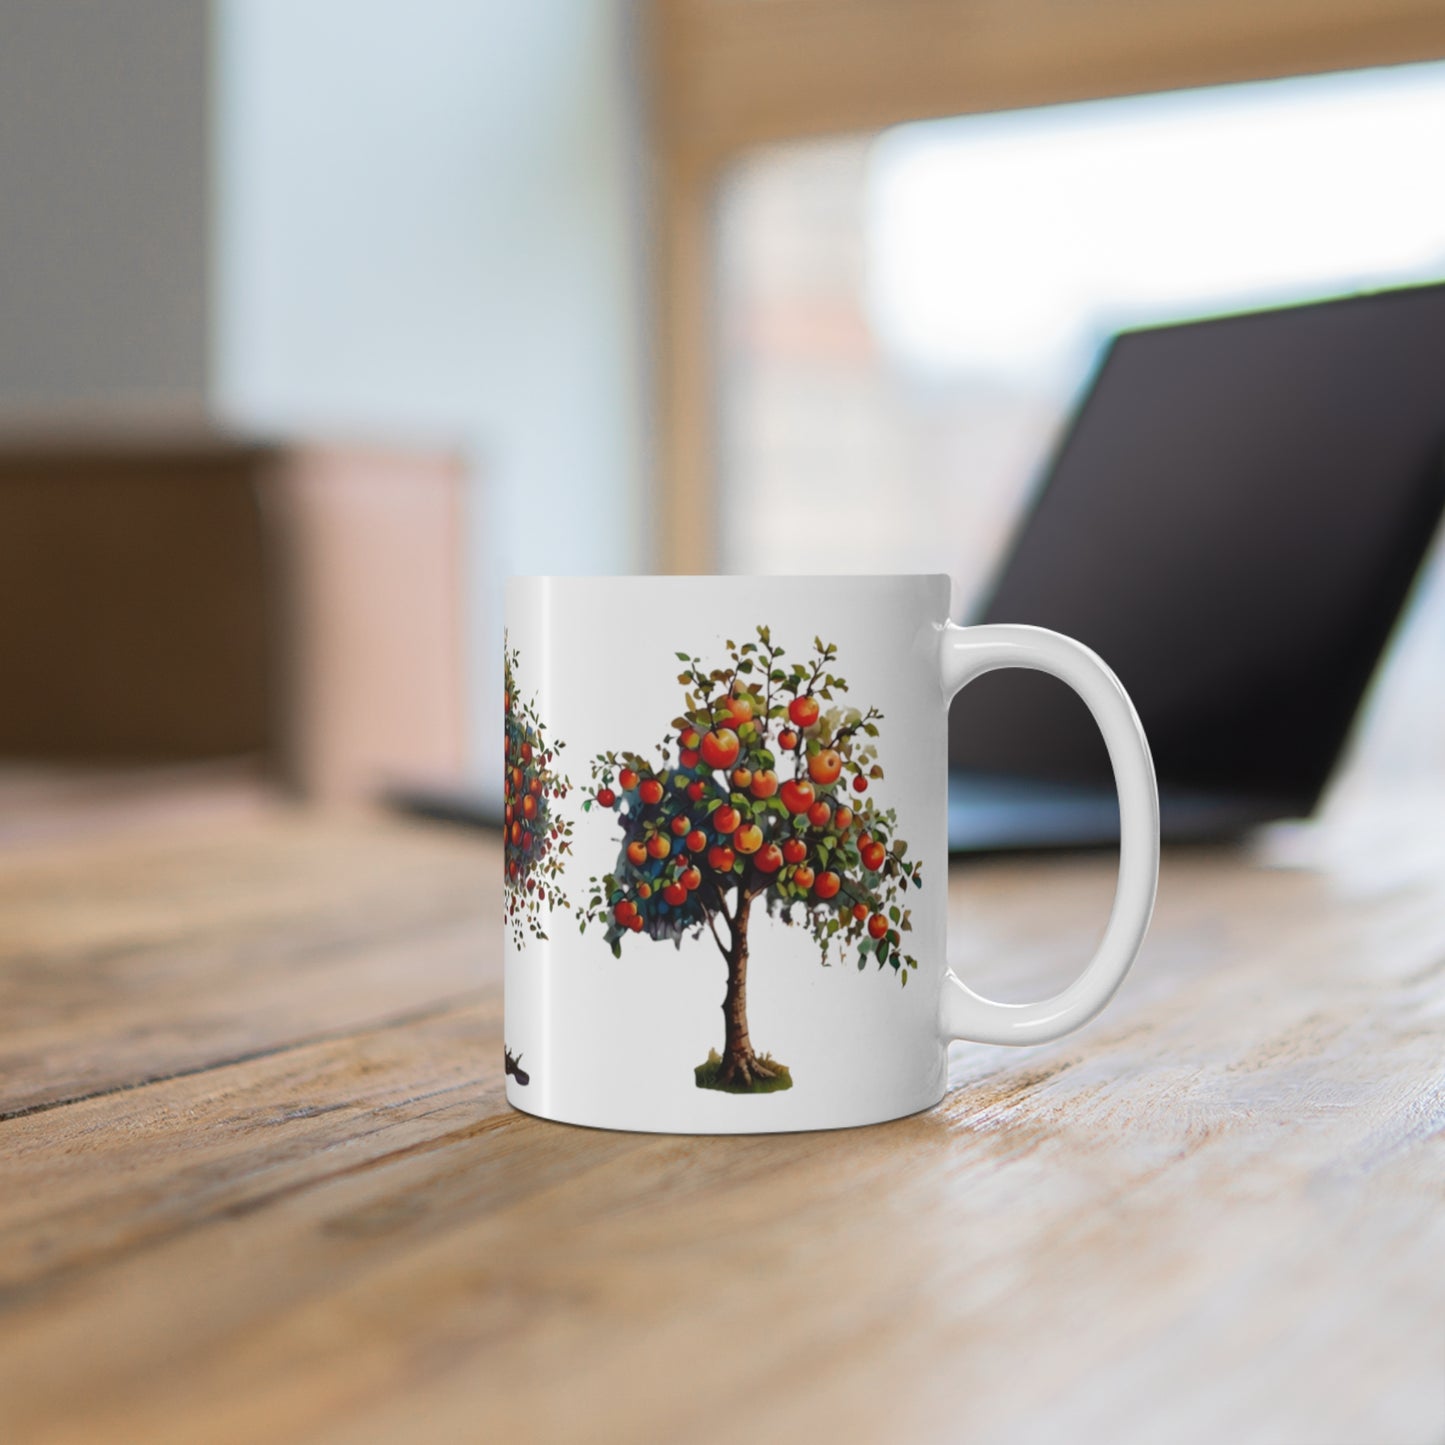 Painted Apples Trees Mug - Ceramic Coffee Mug 11oz